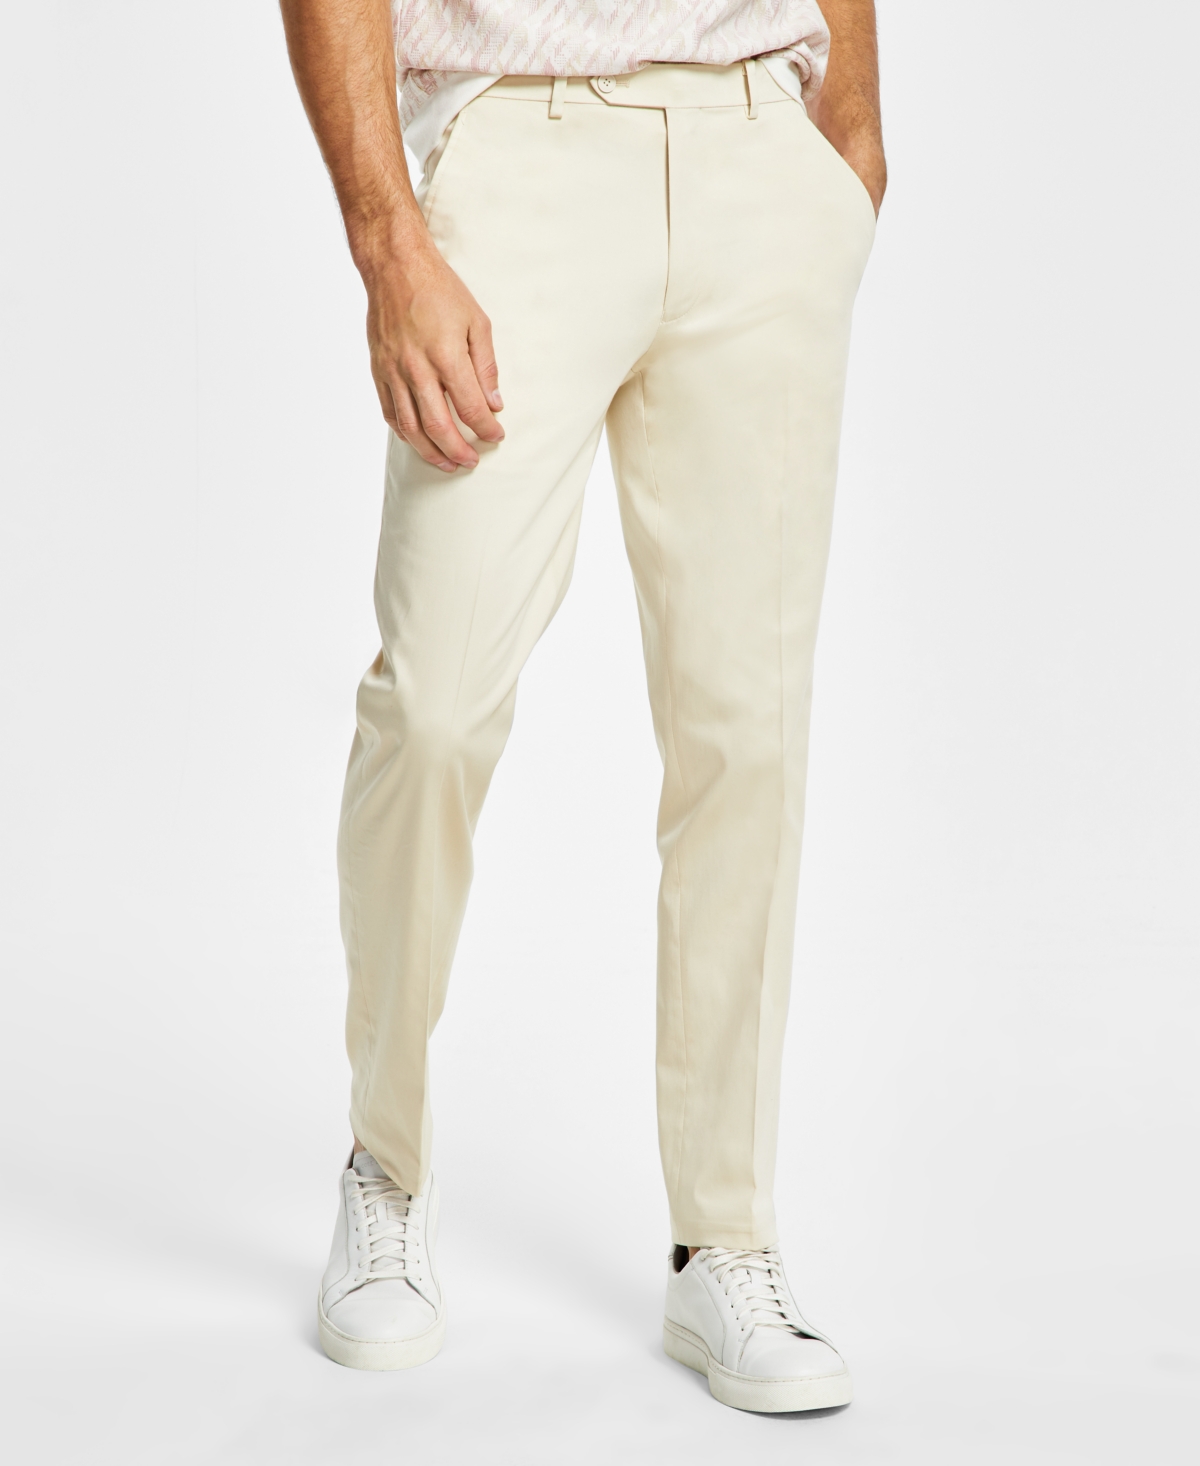 Alfani Men's Slim-Fit Solid Cream Cotton Suit Pants, Created for